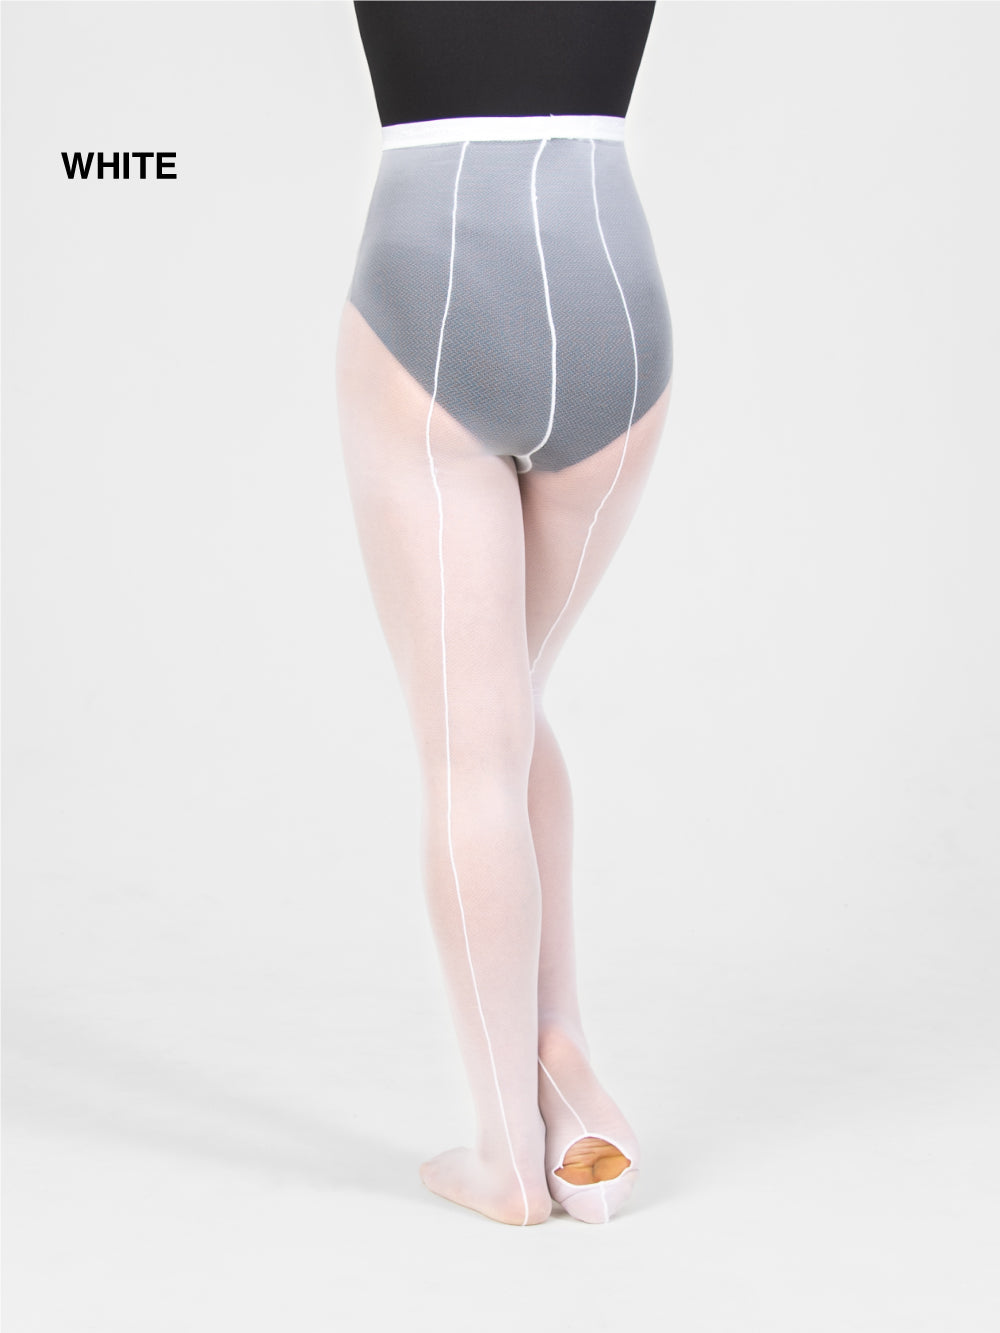 Etoile Dancewear - Body Wrappers A45 Mesh Seamed Tights - All the Dancewear  - by Etoile Dancewear